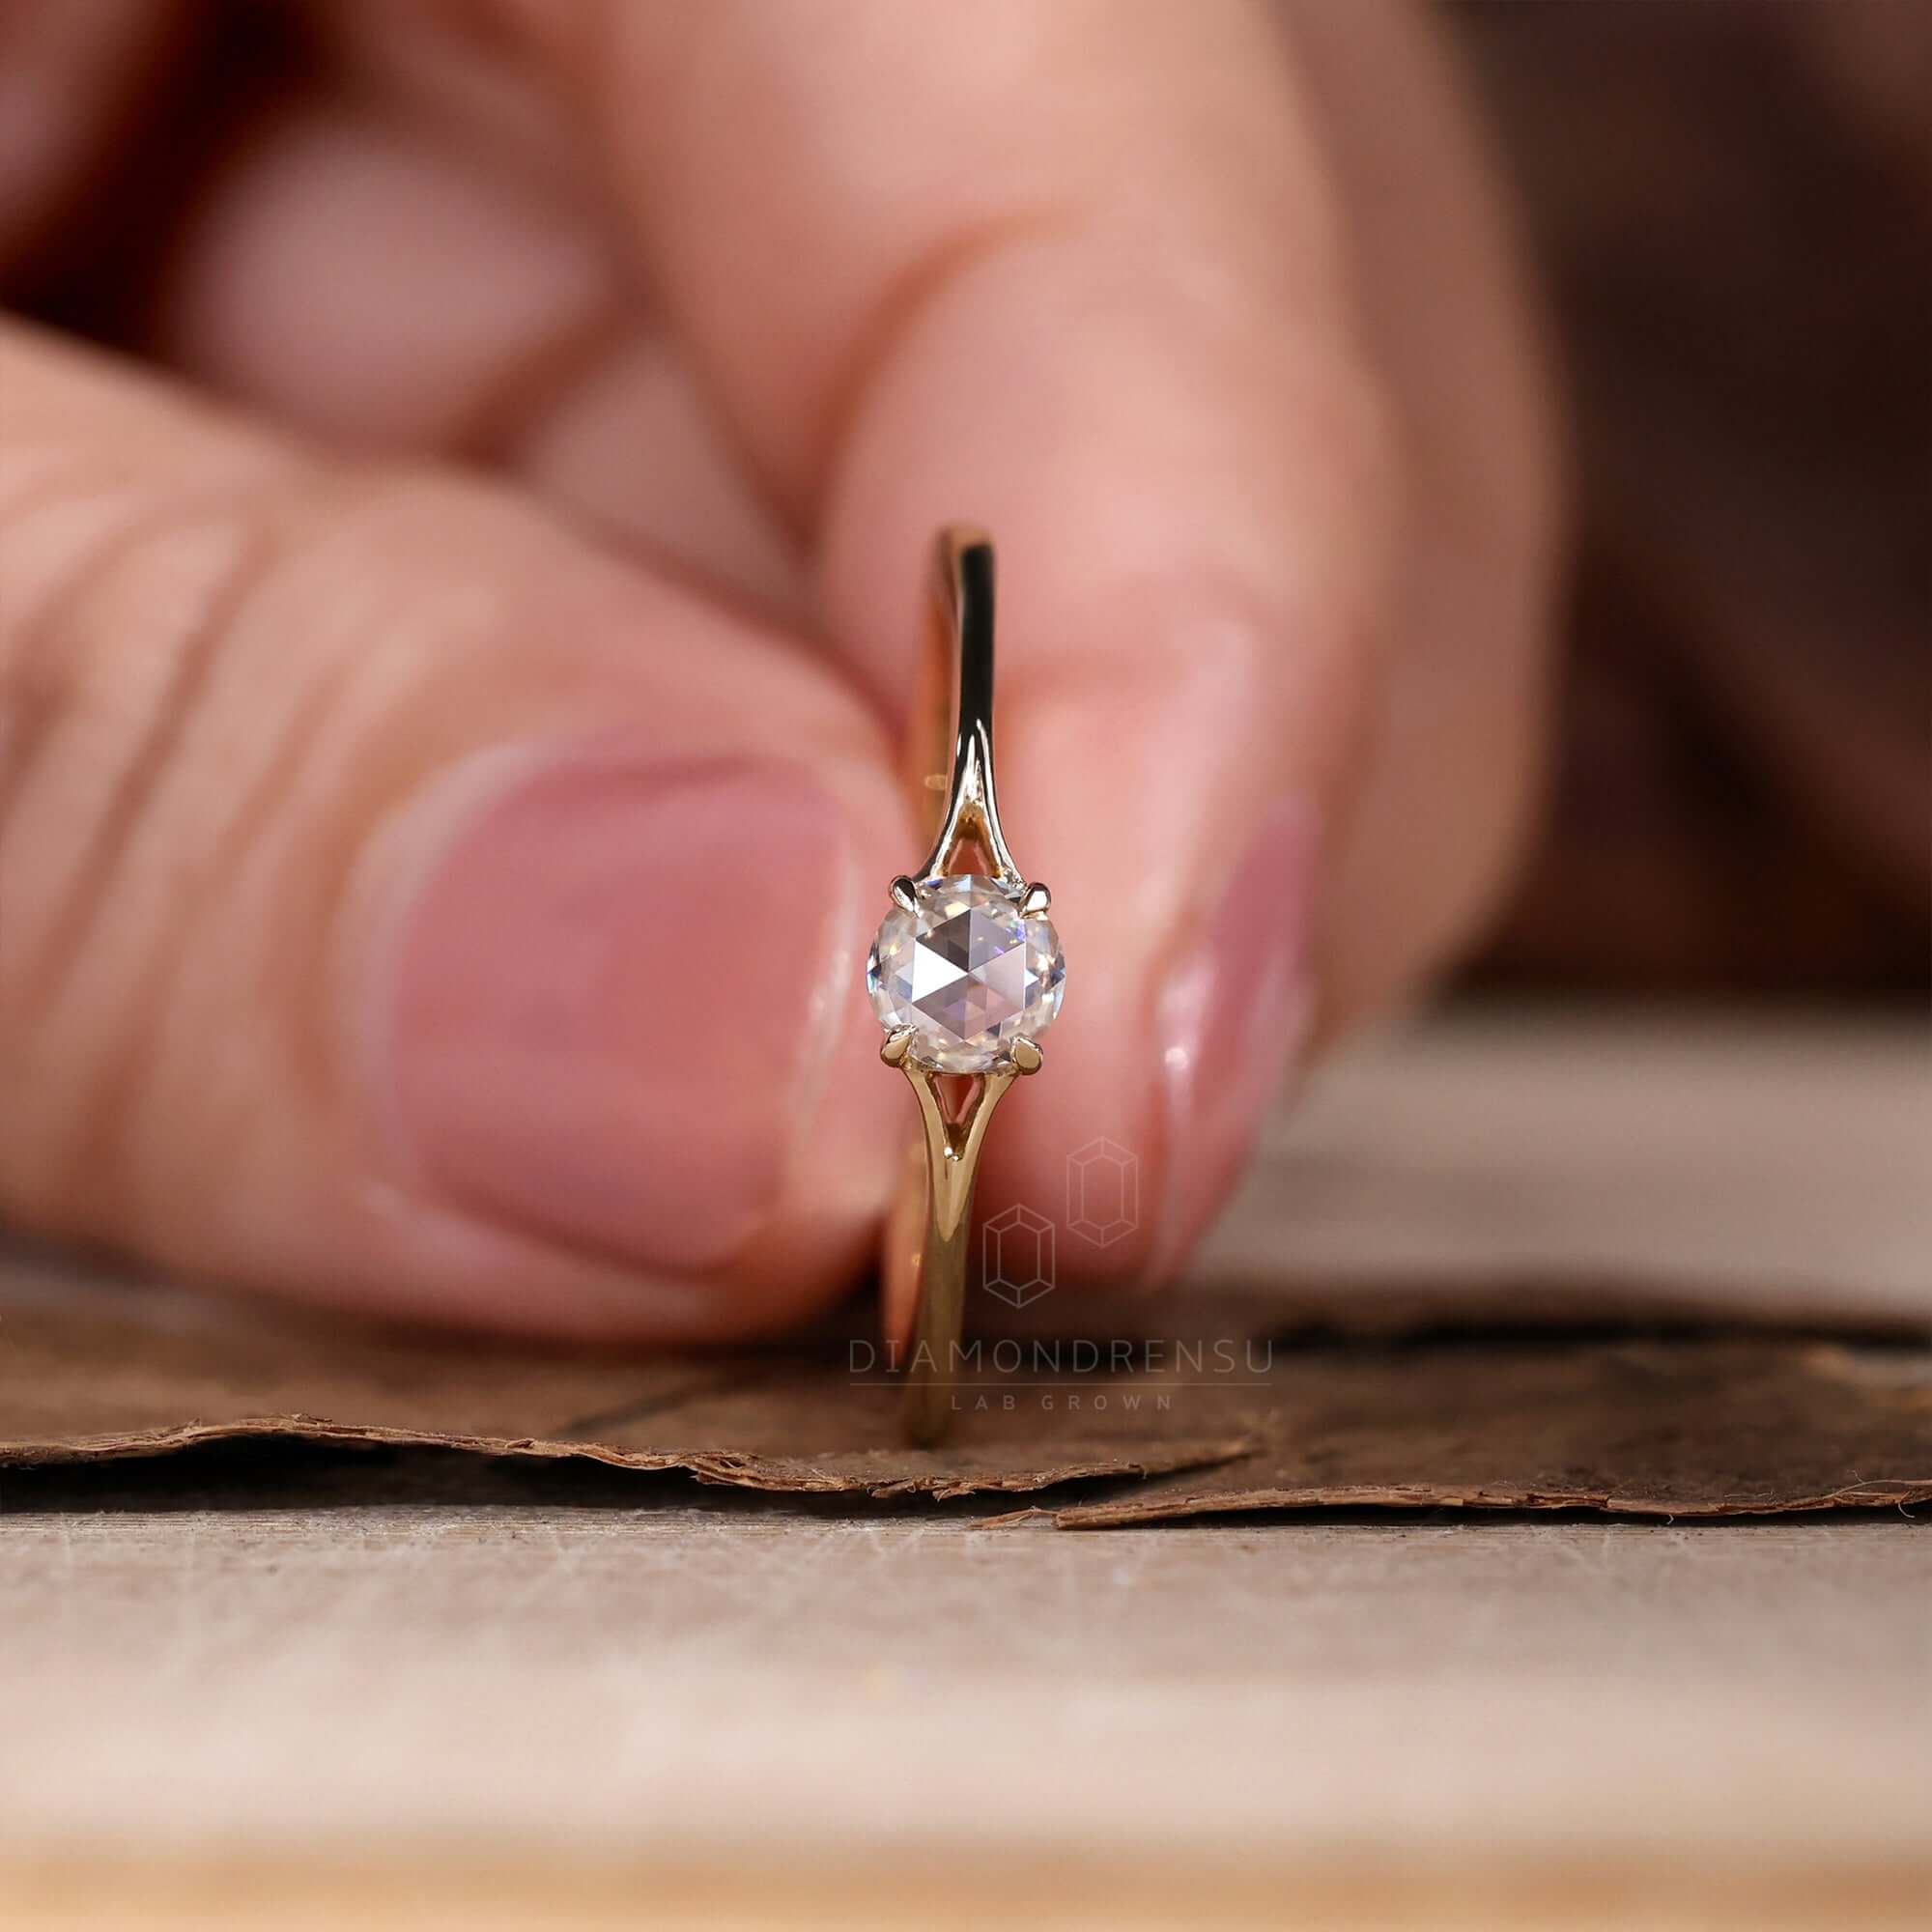 Engagement Rings | The Diamond World